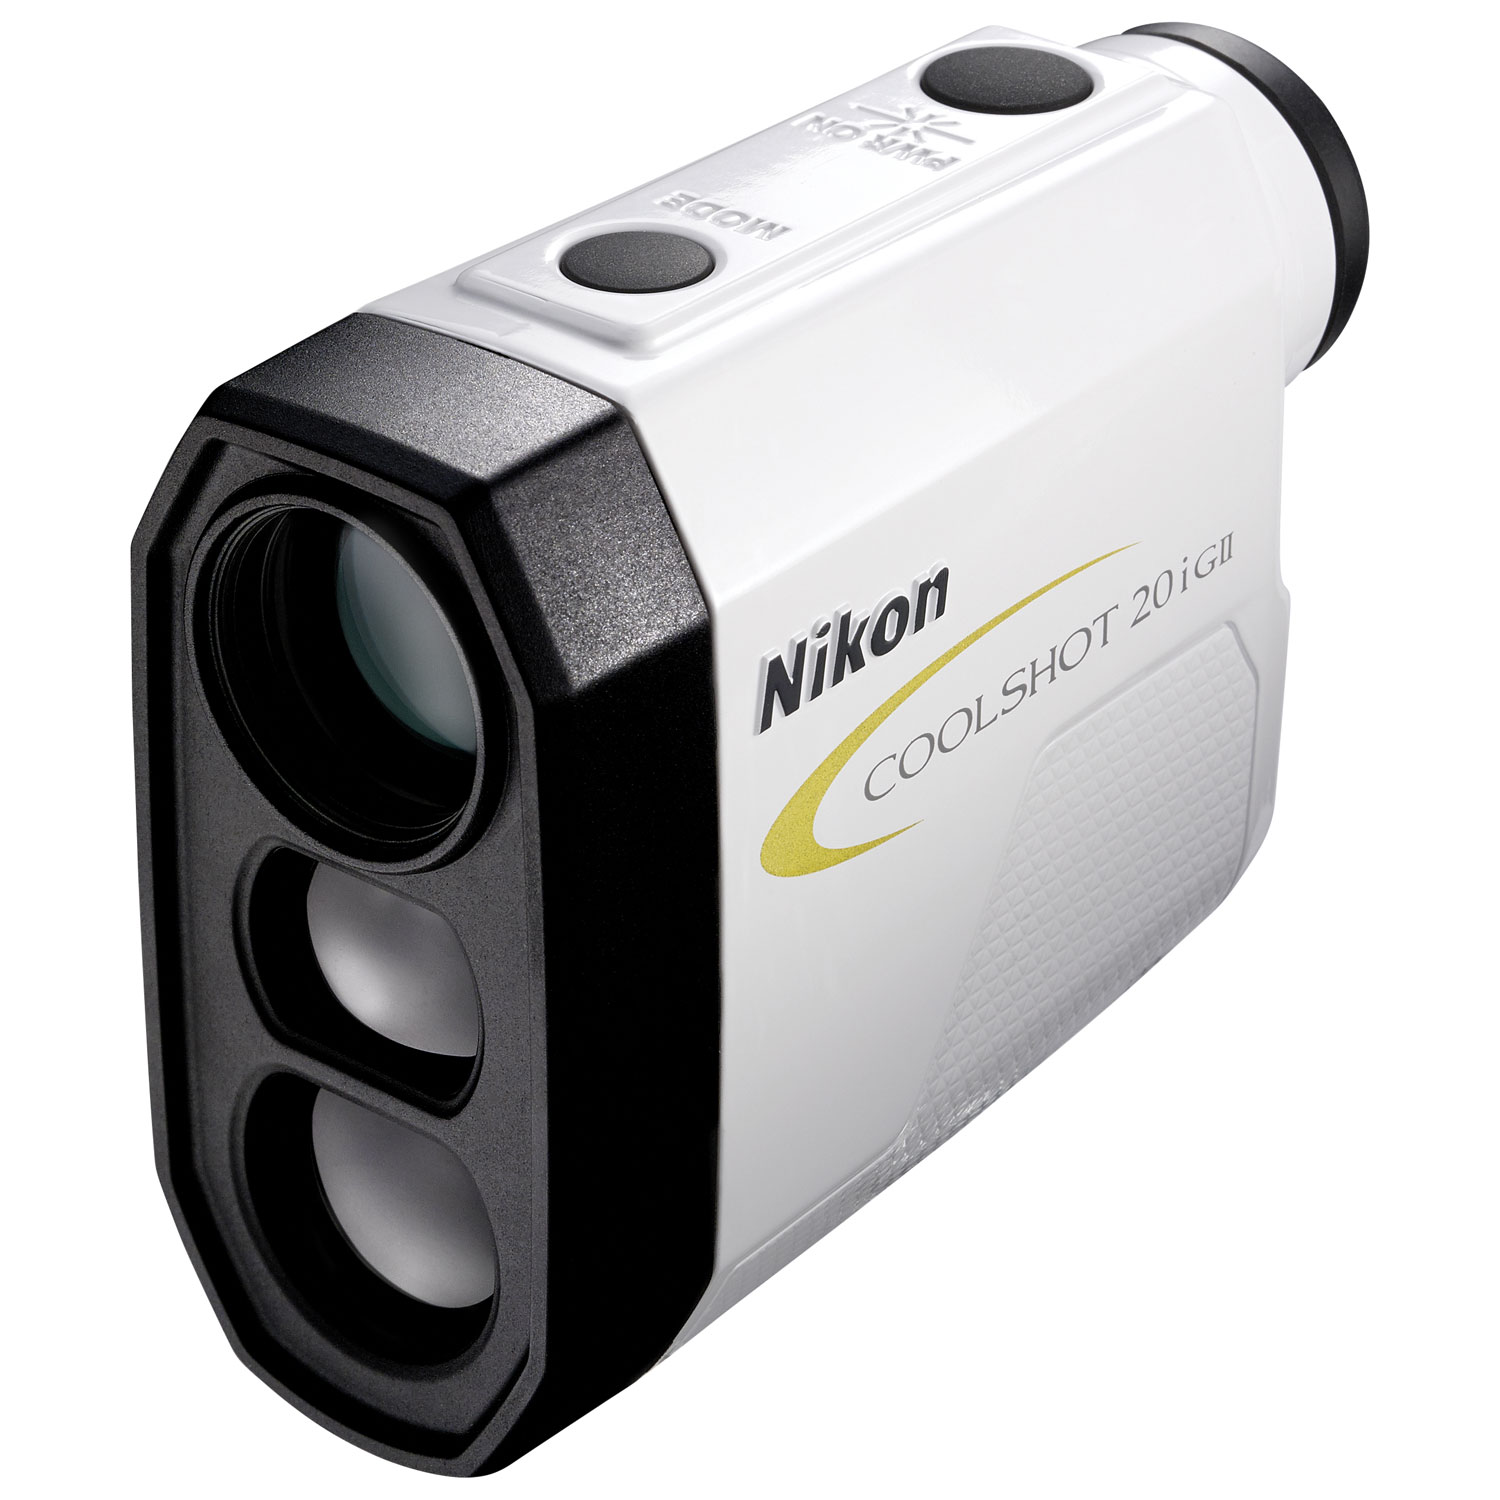 Nikon Coolshot 20i GII Golf Rangefinder - White